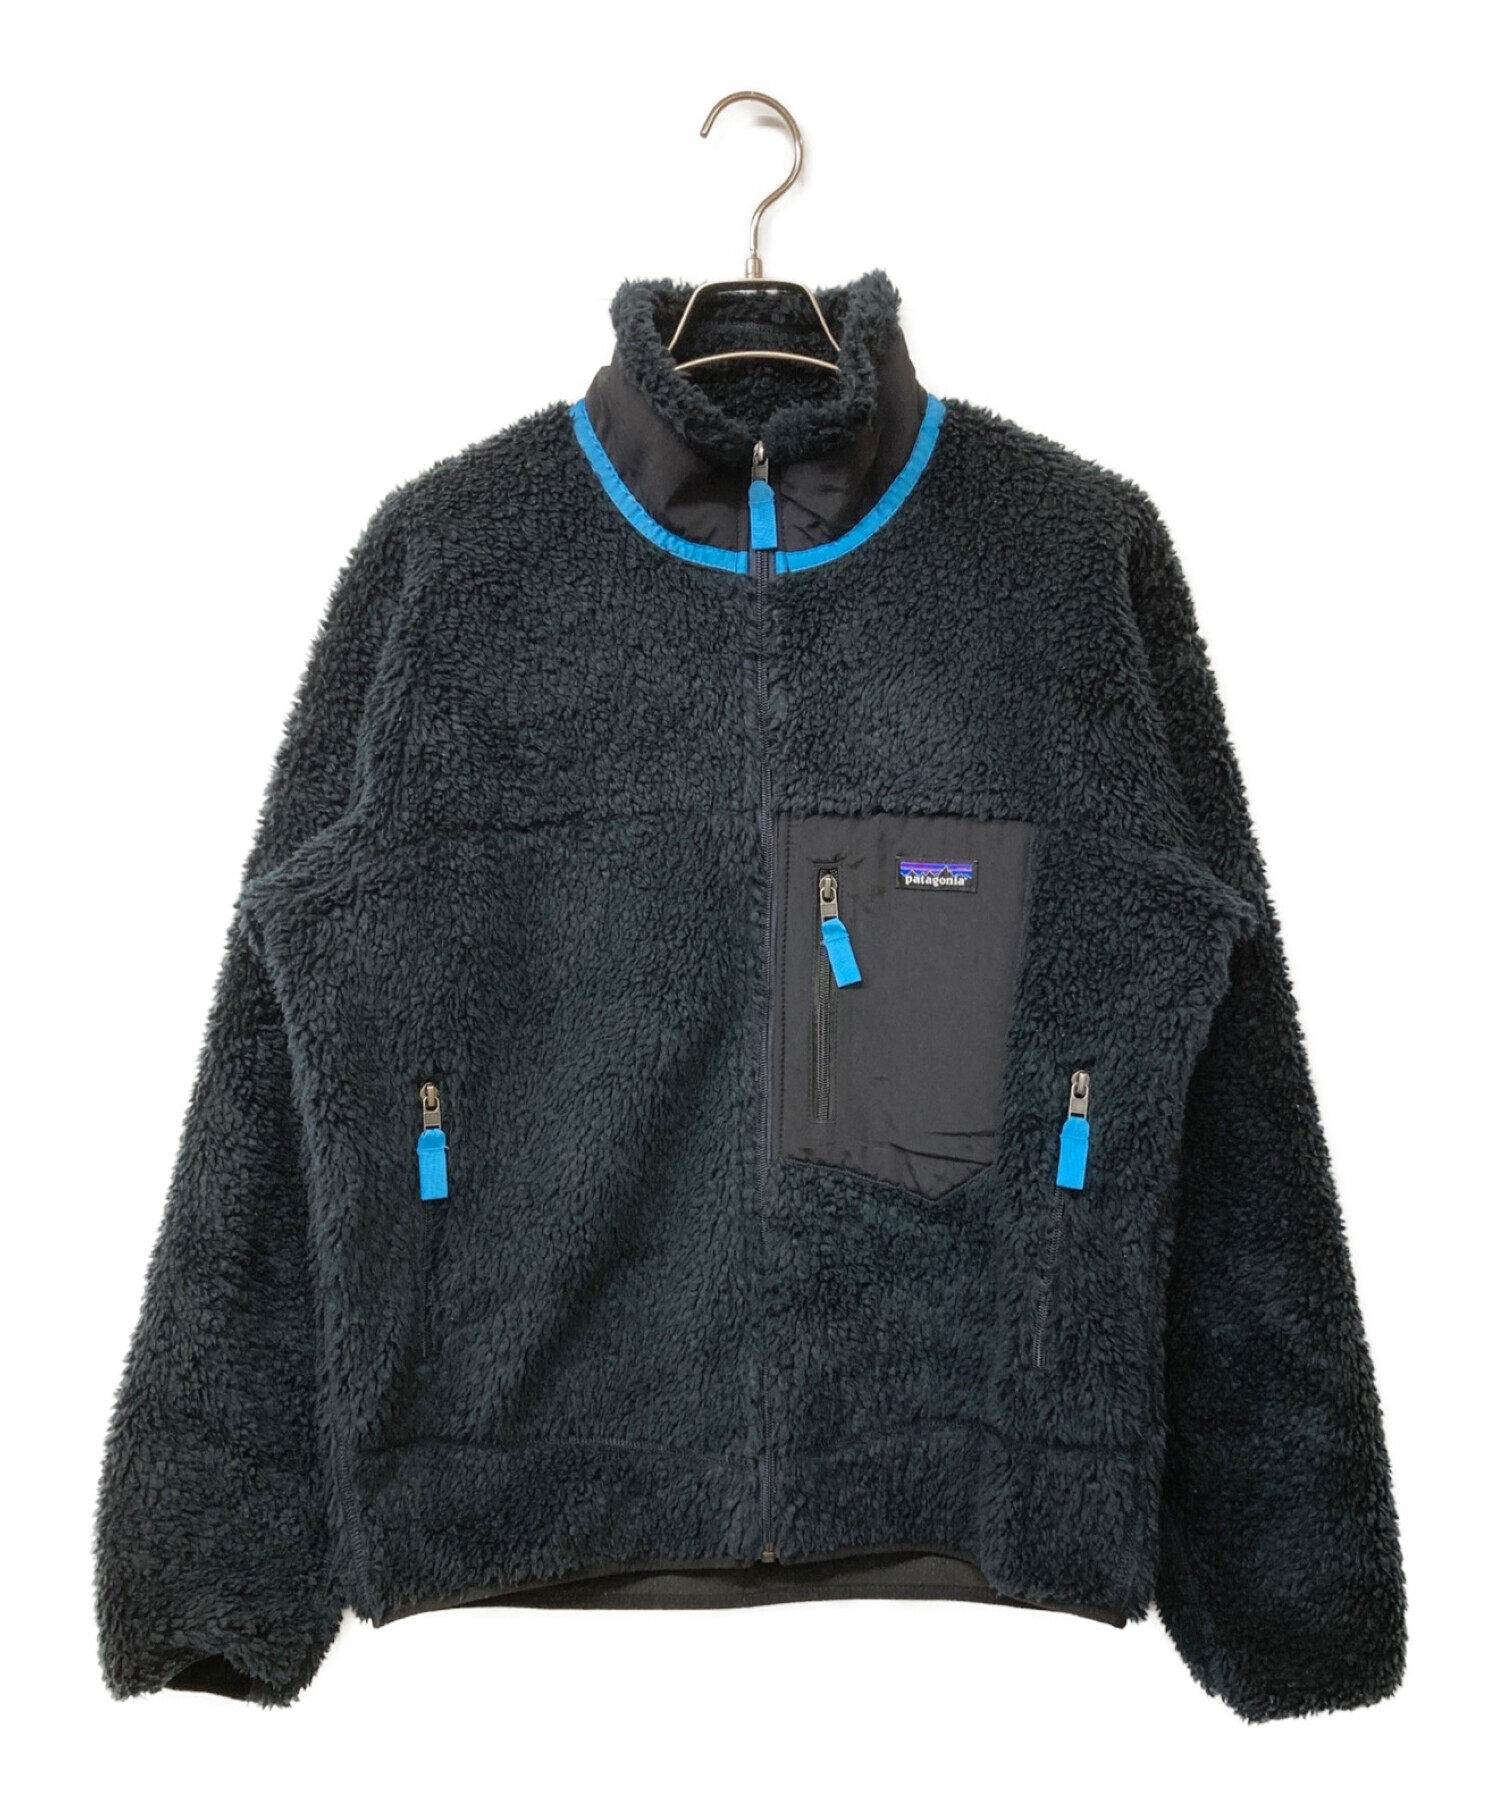 Patagonia (パタゴニア) レトロXフリースジャケット ブラック サイズ:M